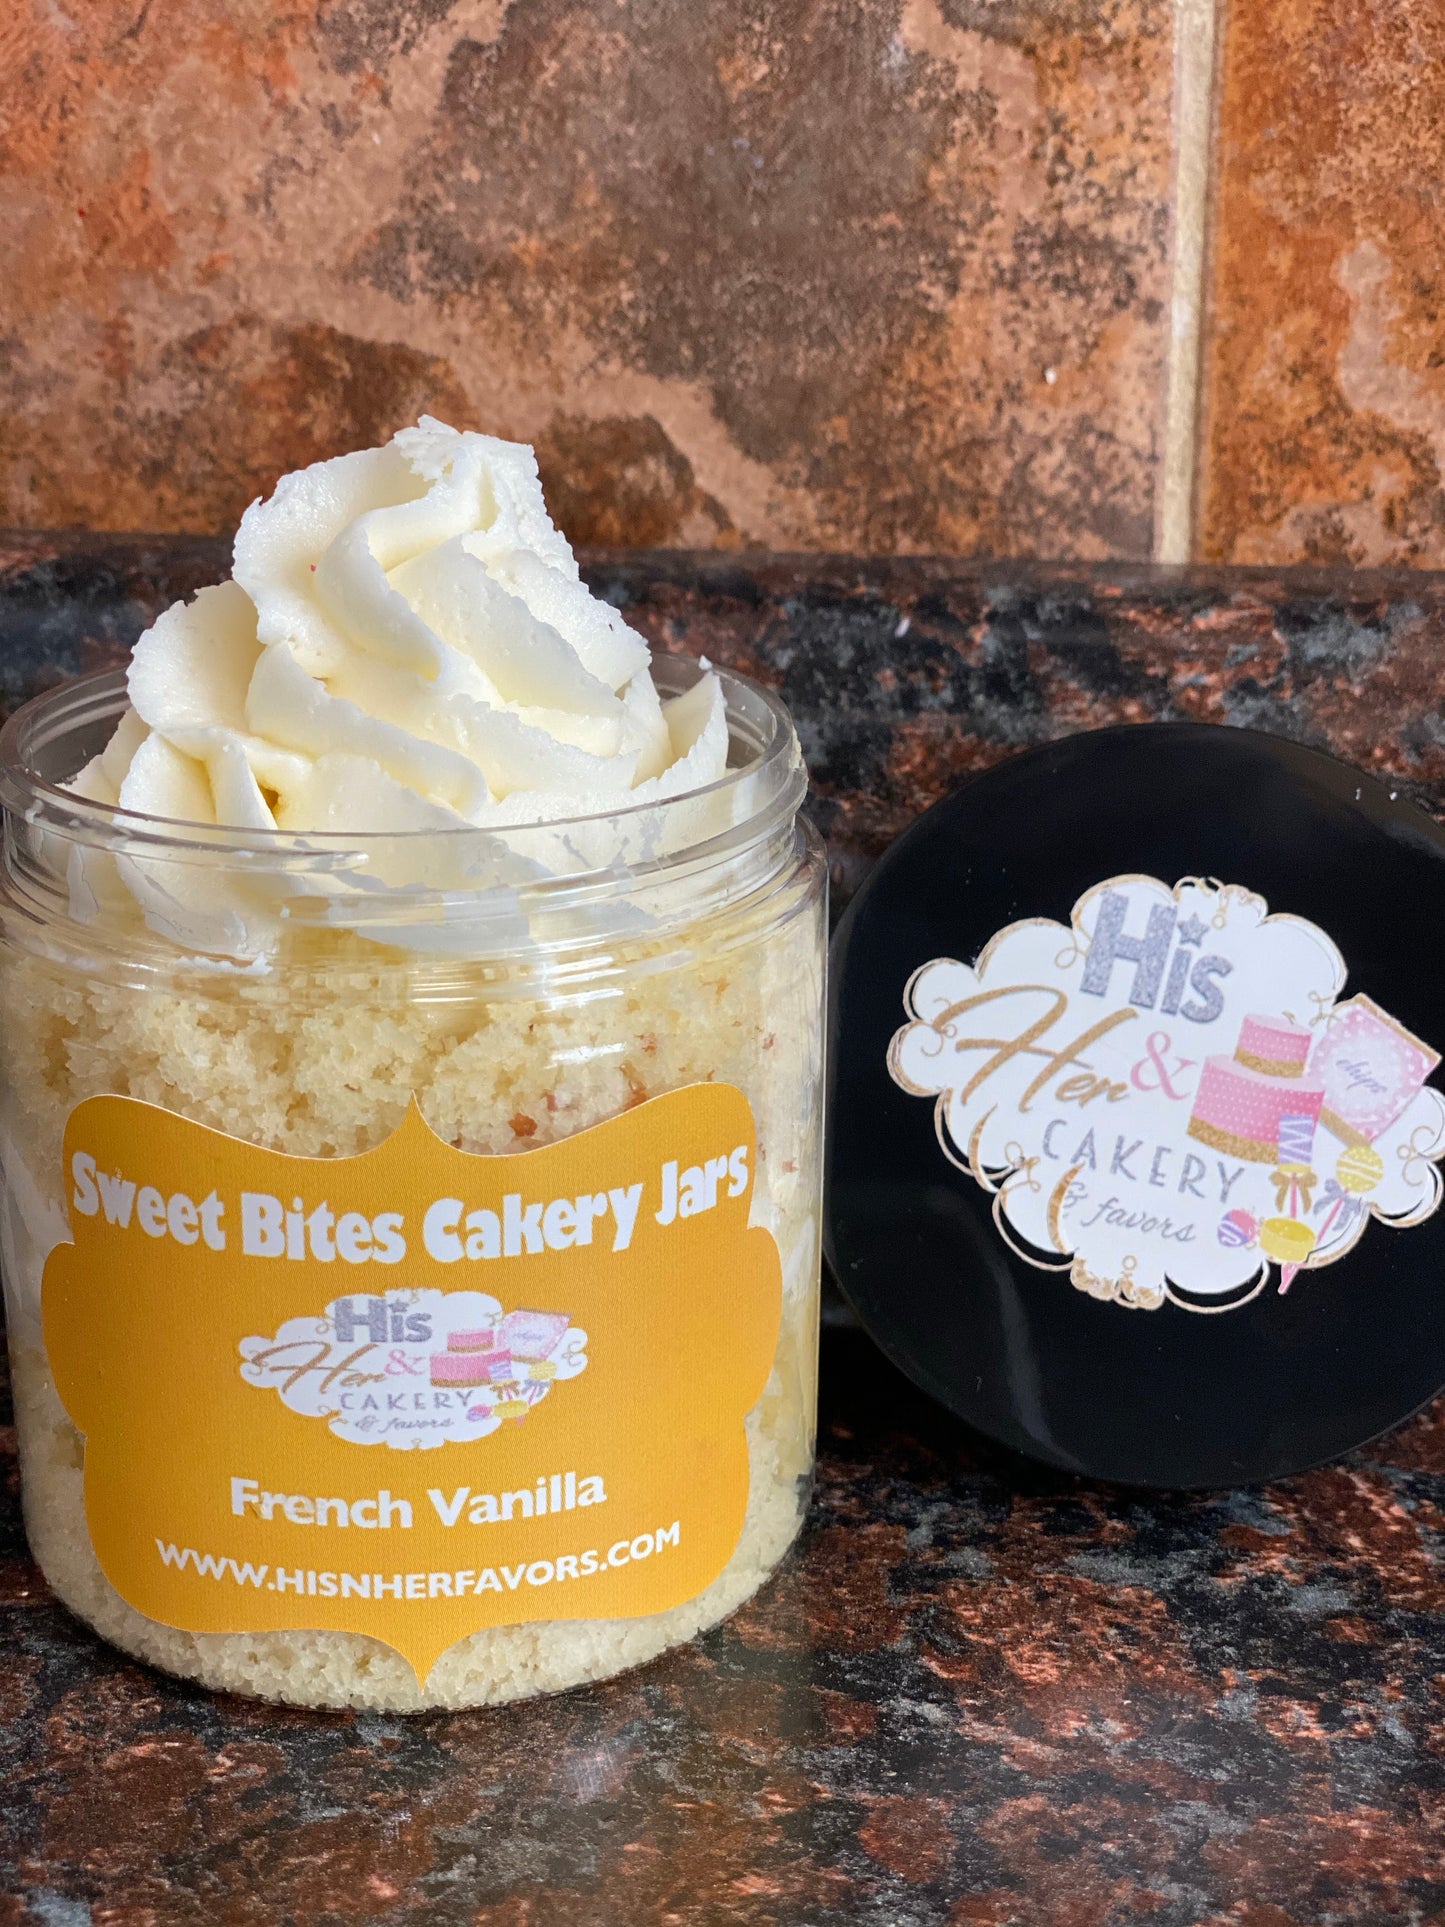 Sweet Bites Cakery Jars